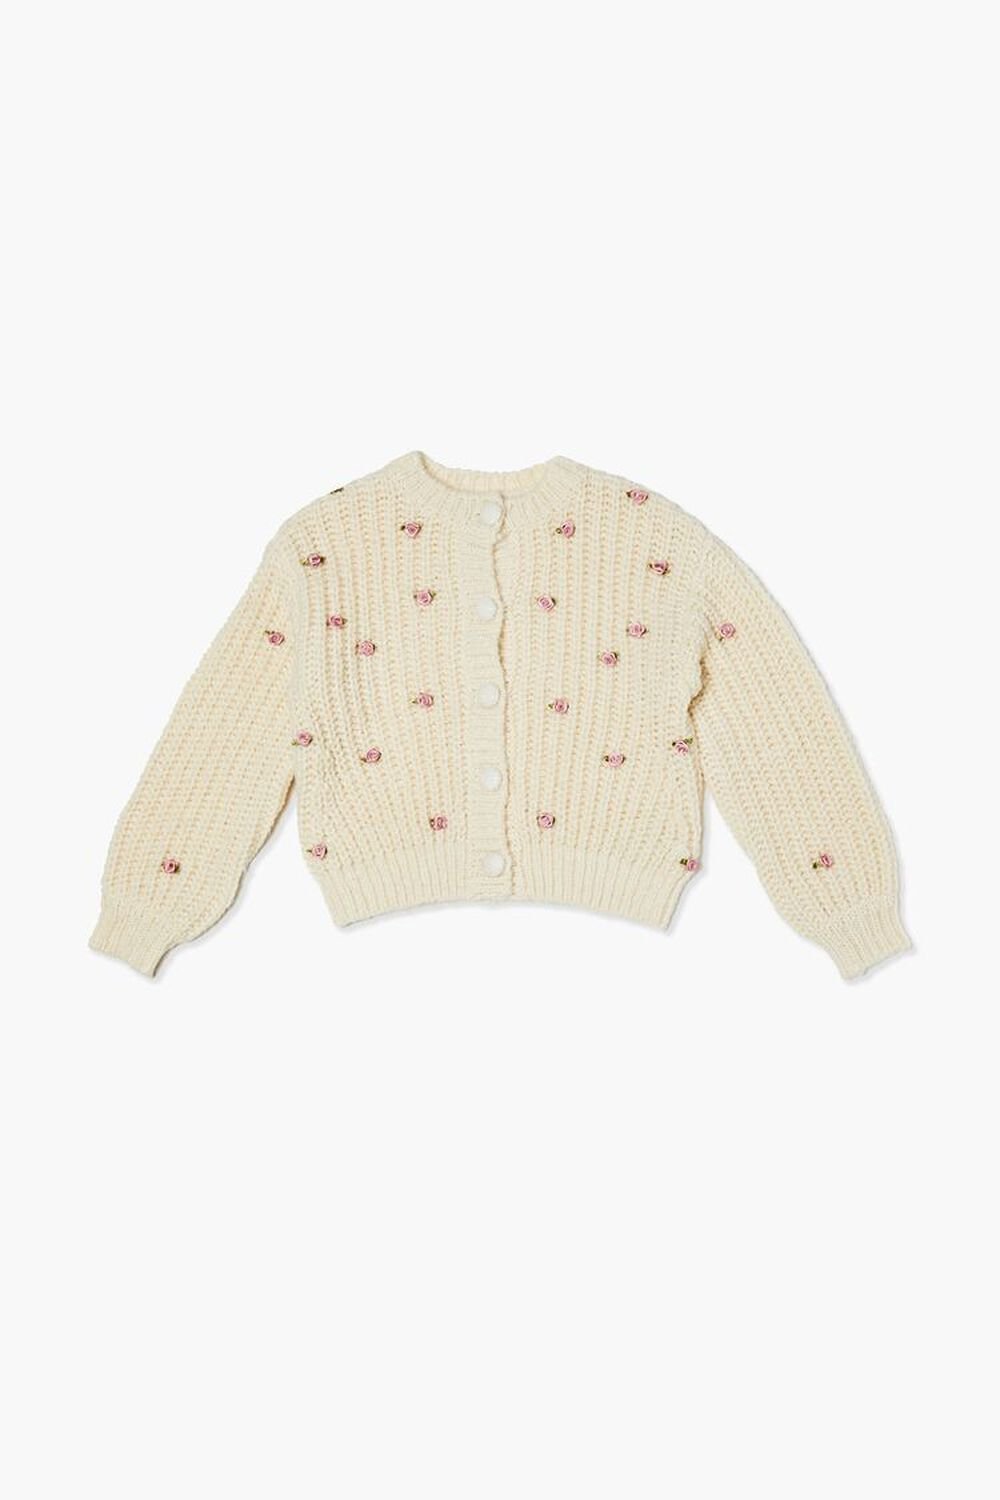 CREAM/MULTI Girls Rose Cardigan Sweater (Kids), image 1